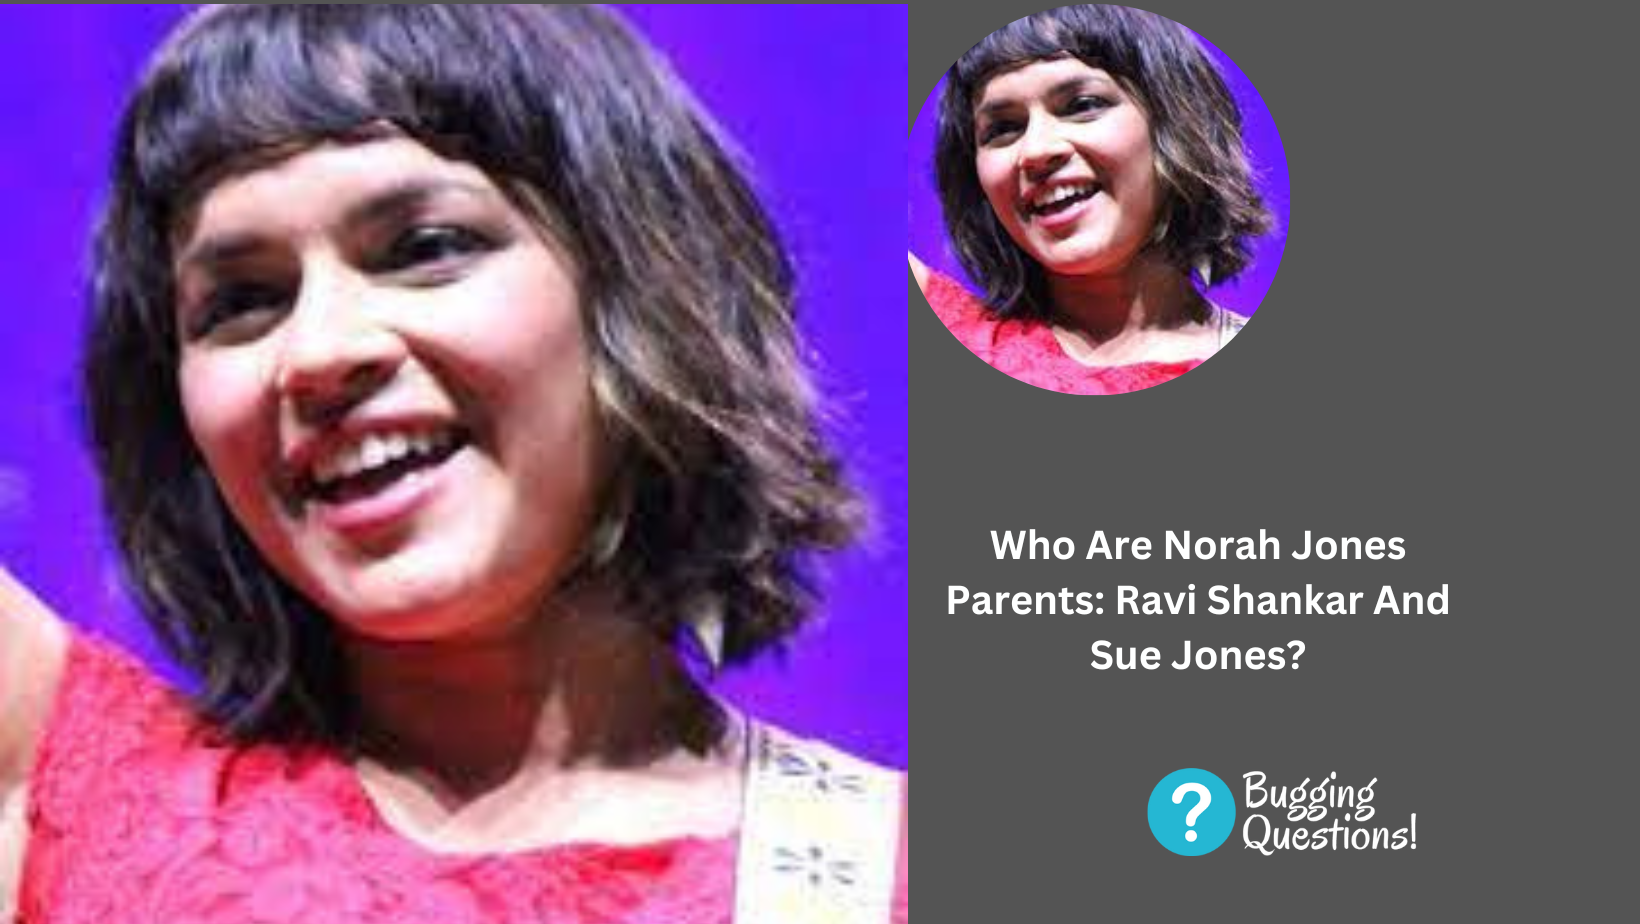 Who Are Norah Jones Parents: Ravi Shankar And Sue Jones?